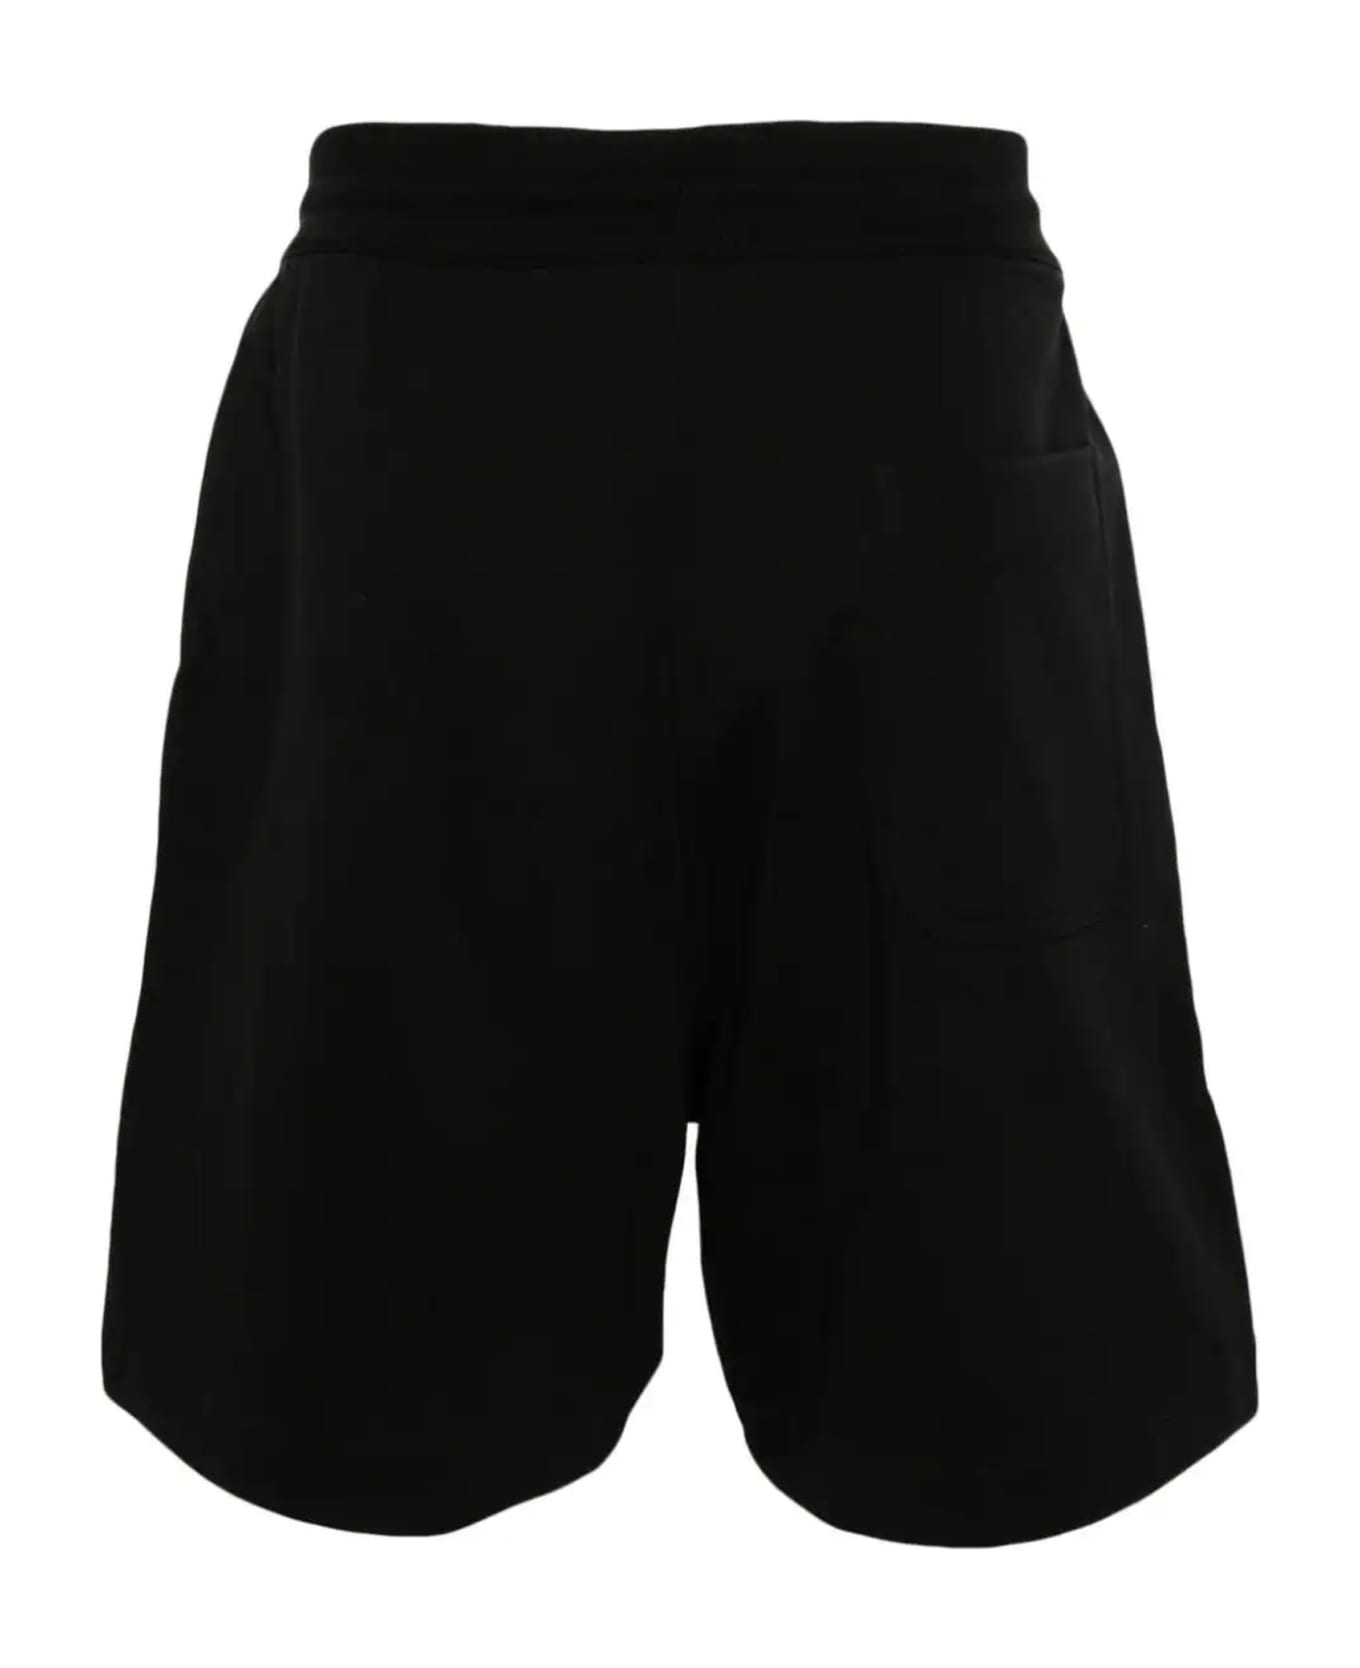 Y-3 Shorts Black - Black